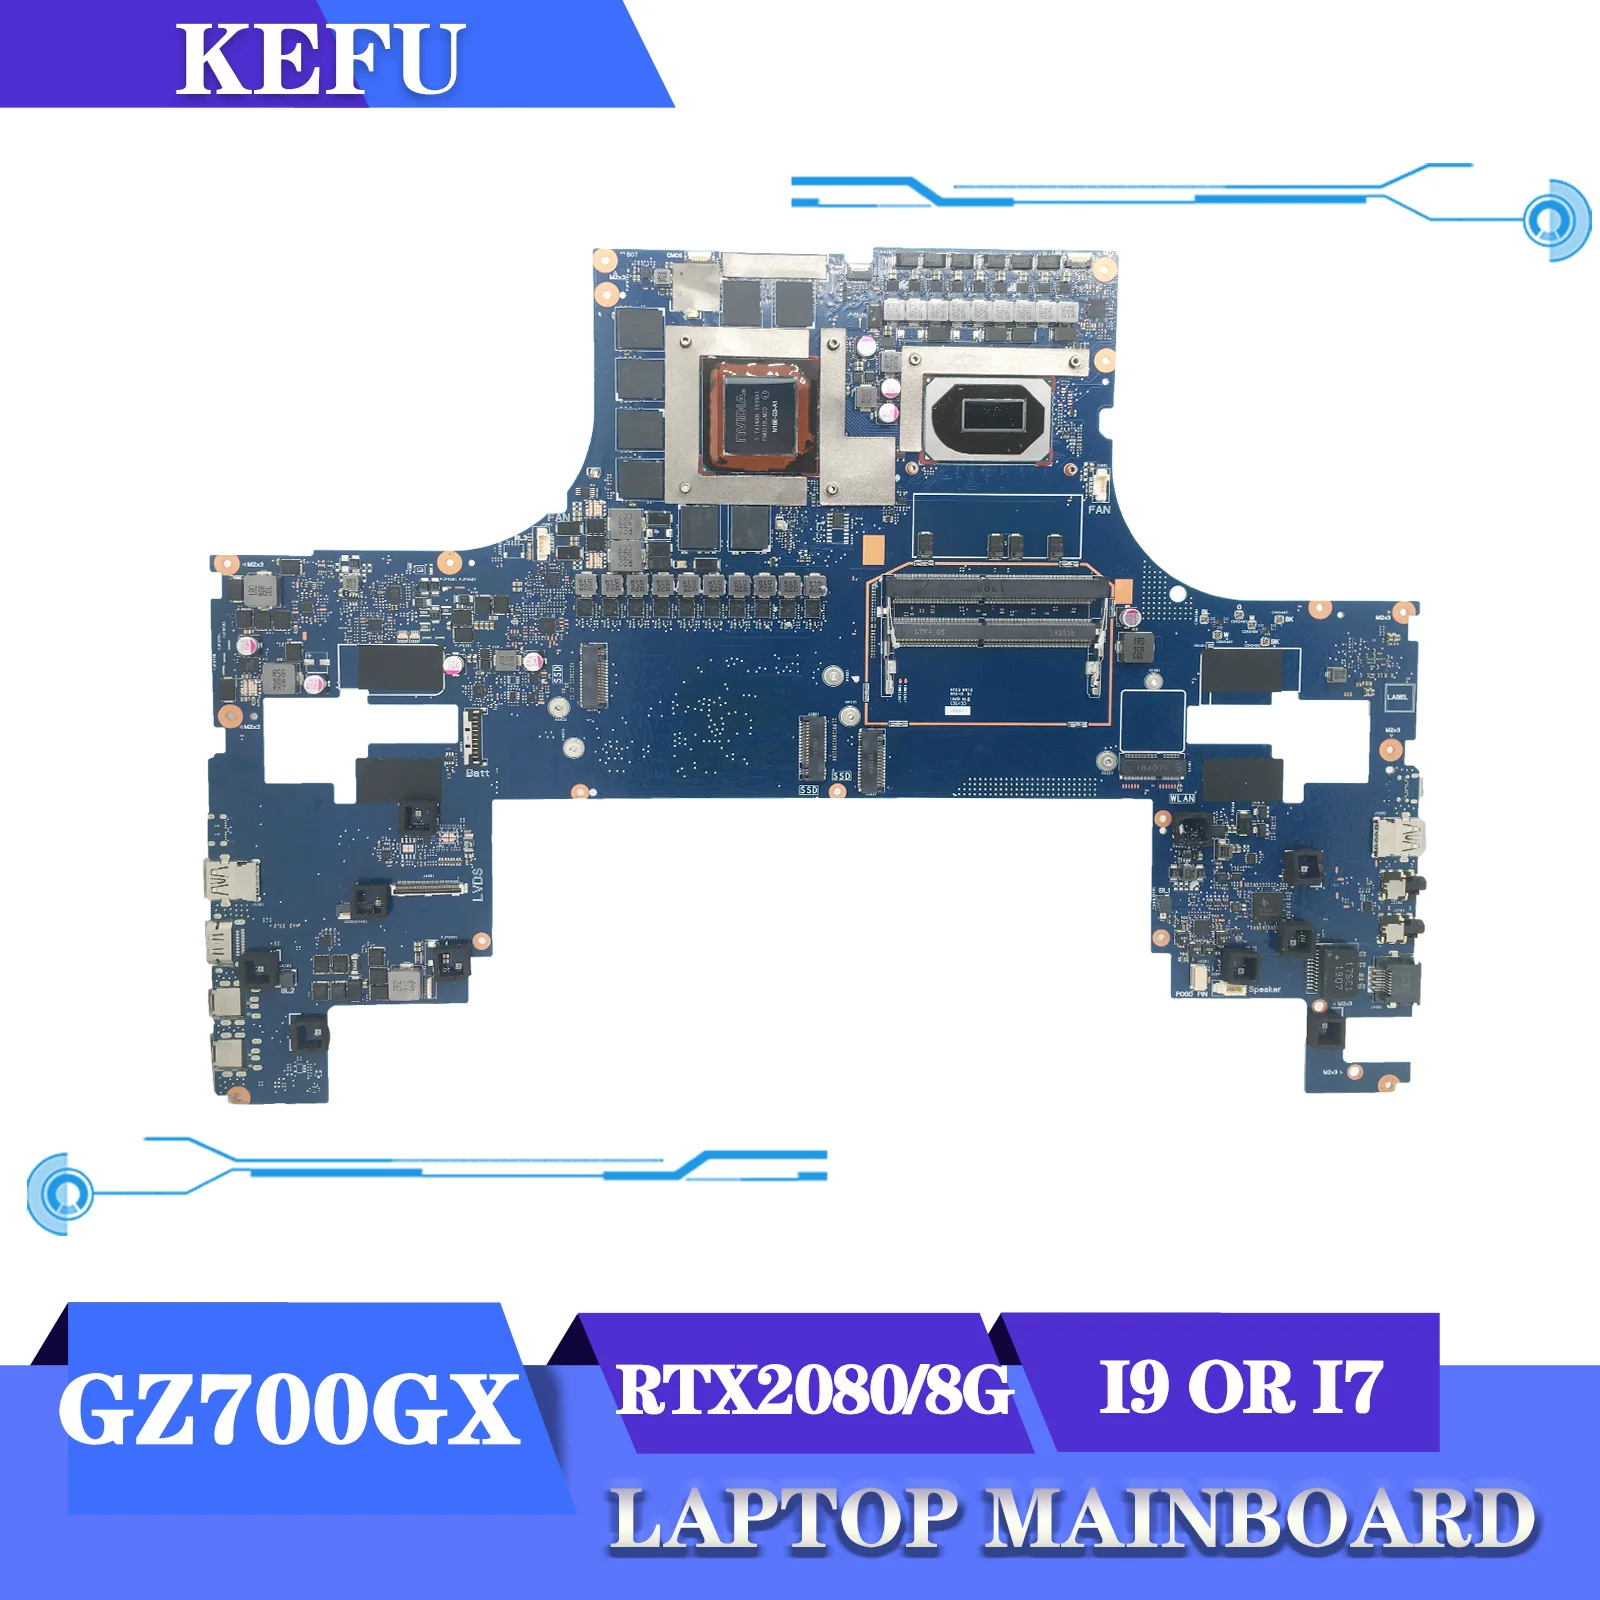 

KEFU GZ700GX Motherboard For ASUS ROG Mothership GZ700G AZ700GX AZ700G Laptop Mainboard I7 CPU I9-9980HK RTX2080/8G